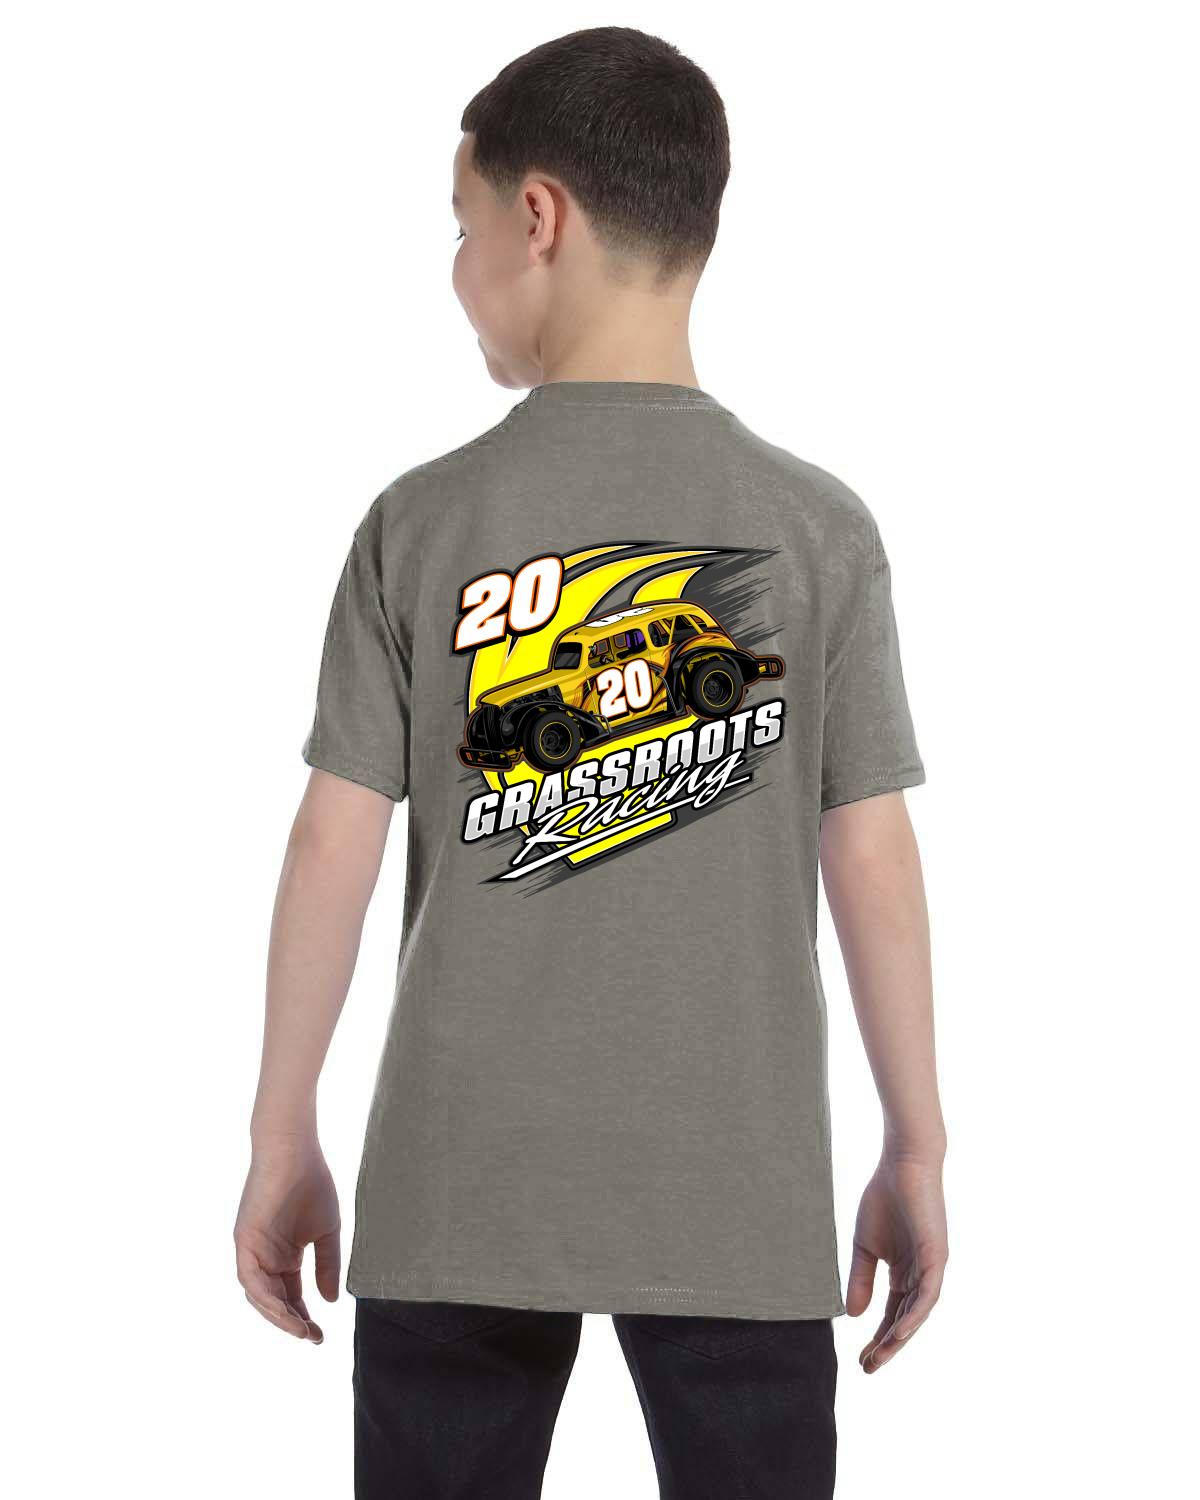 Cole McFadden / Grassroots Racing Youth tshirt